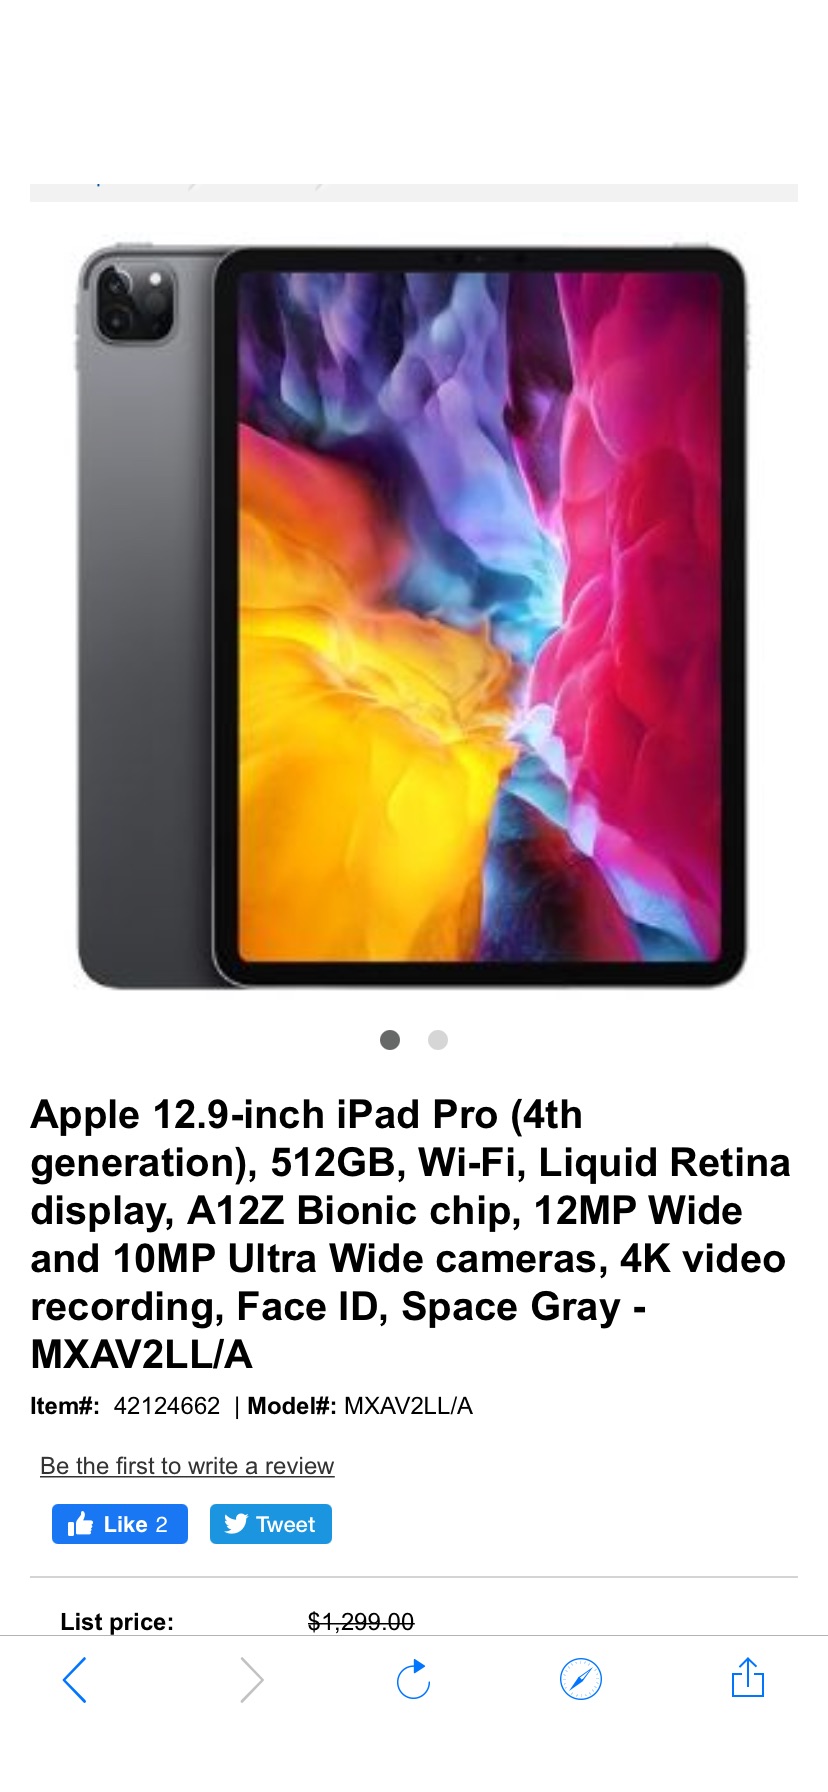 Apple 12.9-inch iPad Pro (4th generation), 第四代512GB, Wi-Fi, Space Gray - MXAV2LL/A at TigerDirect.com